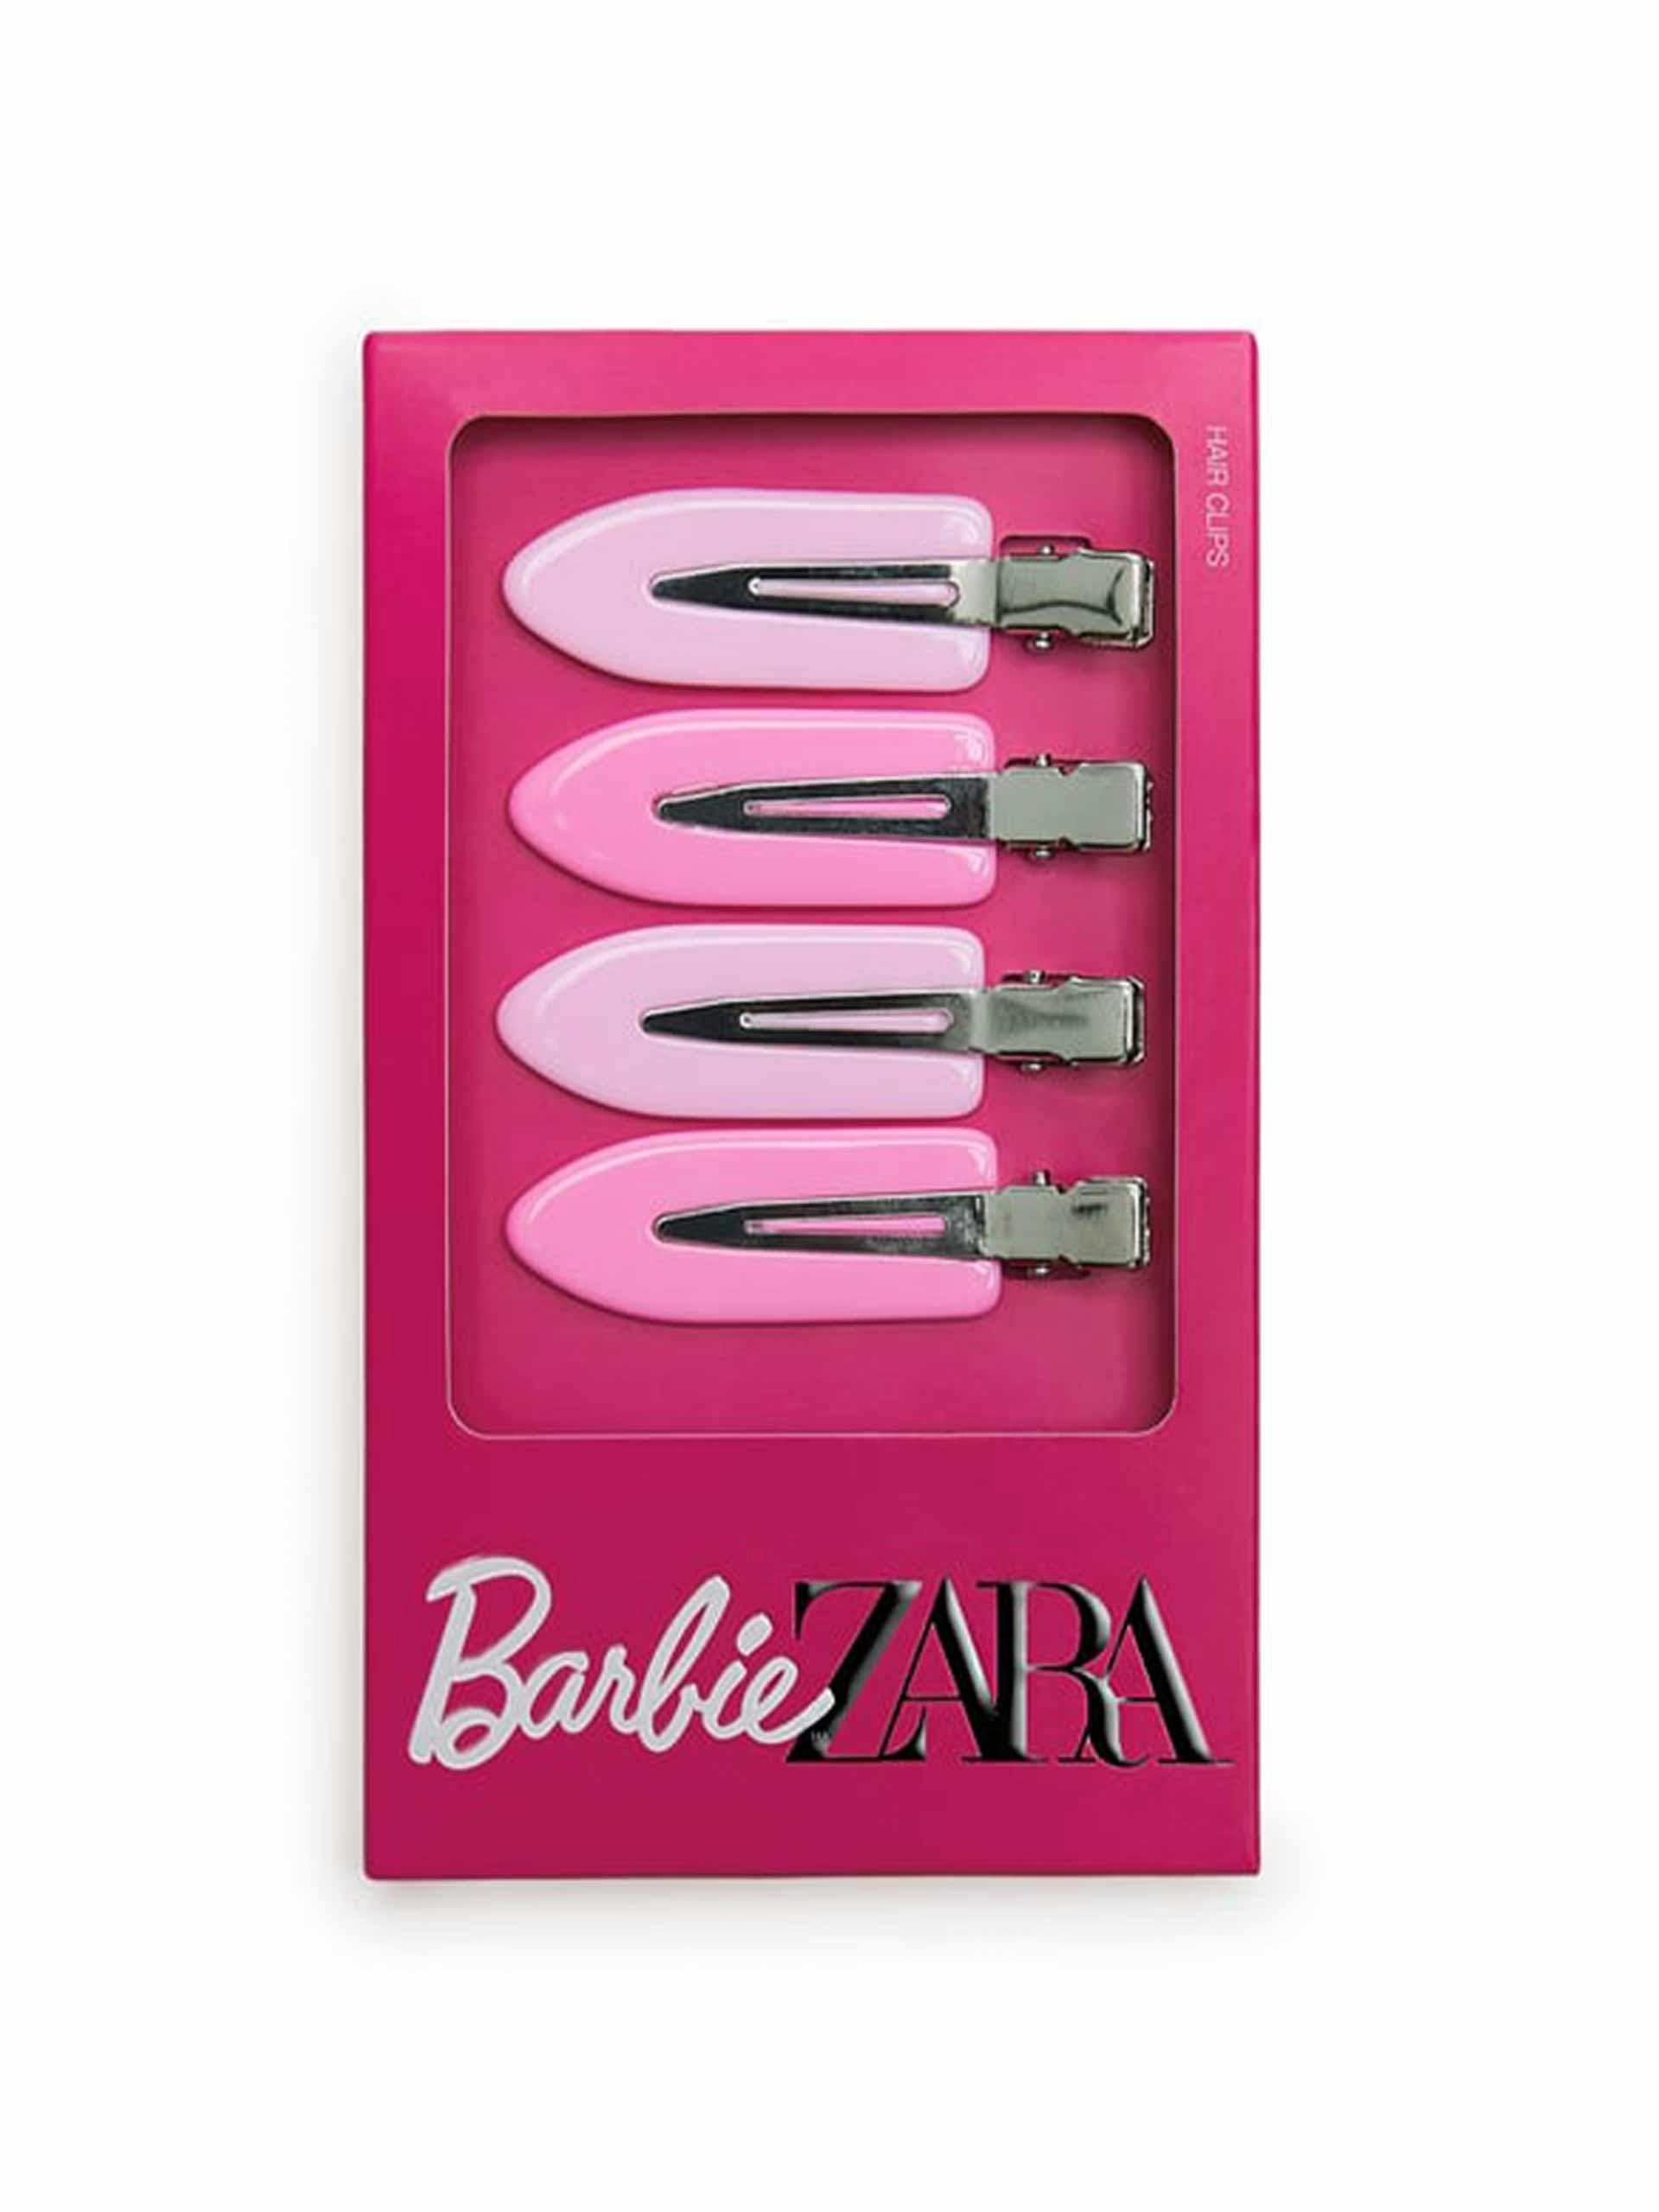 Barbie hair clips